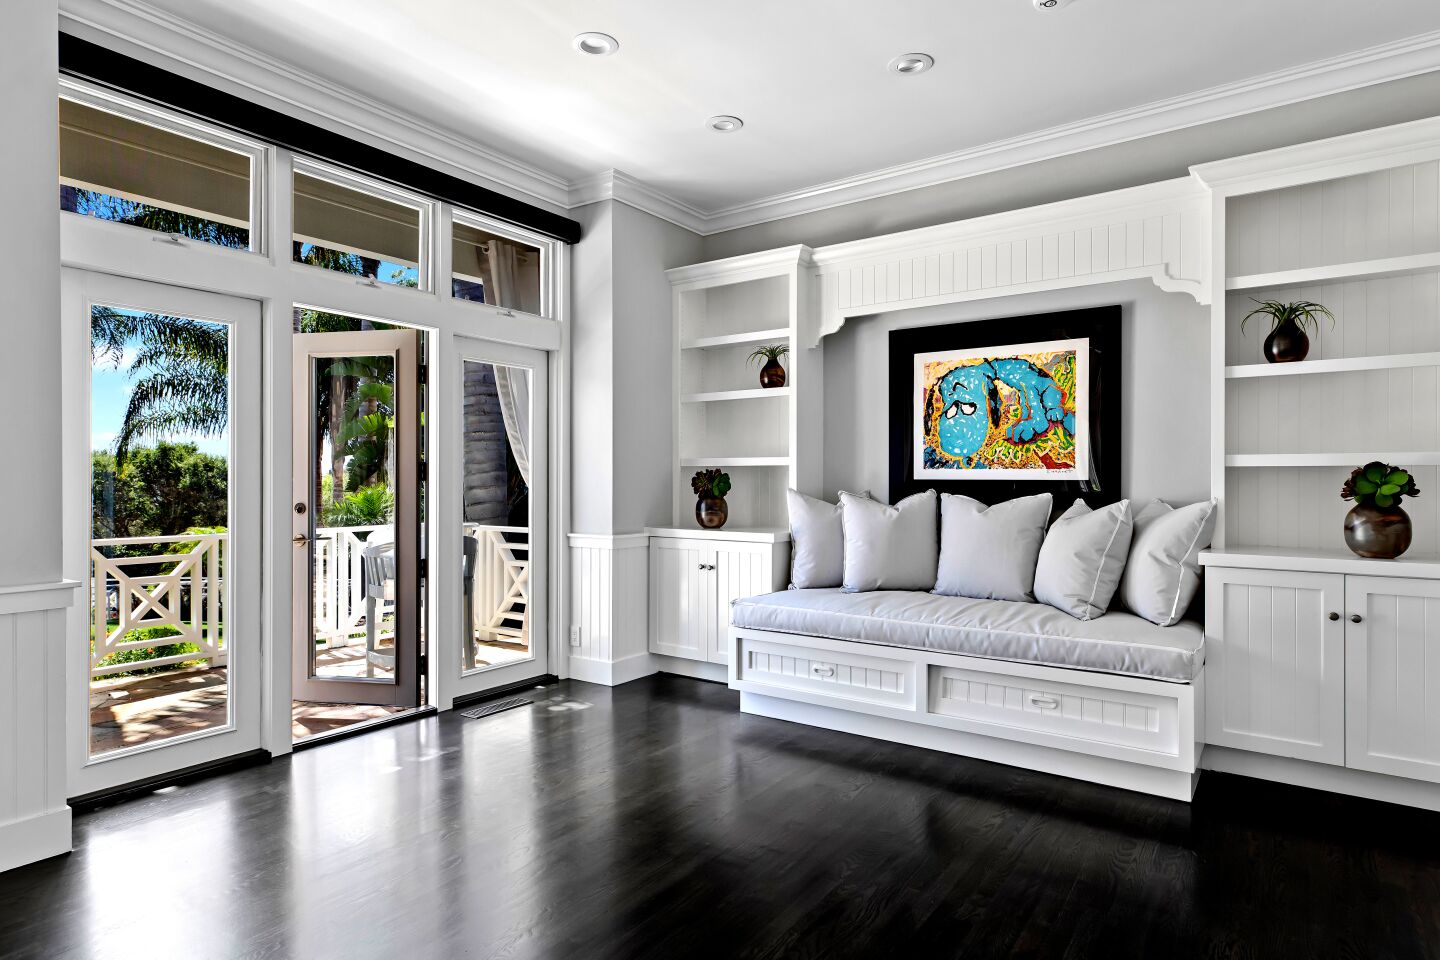 Crisp white millwork, dark hardwood floors and light gray hues give the interior a calming feel.